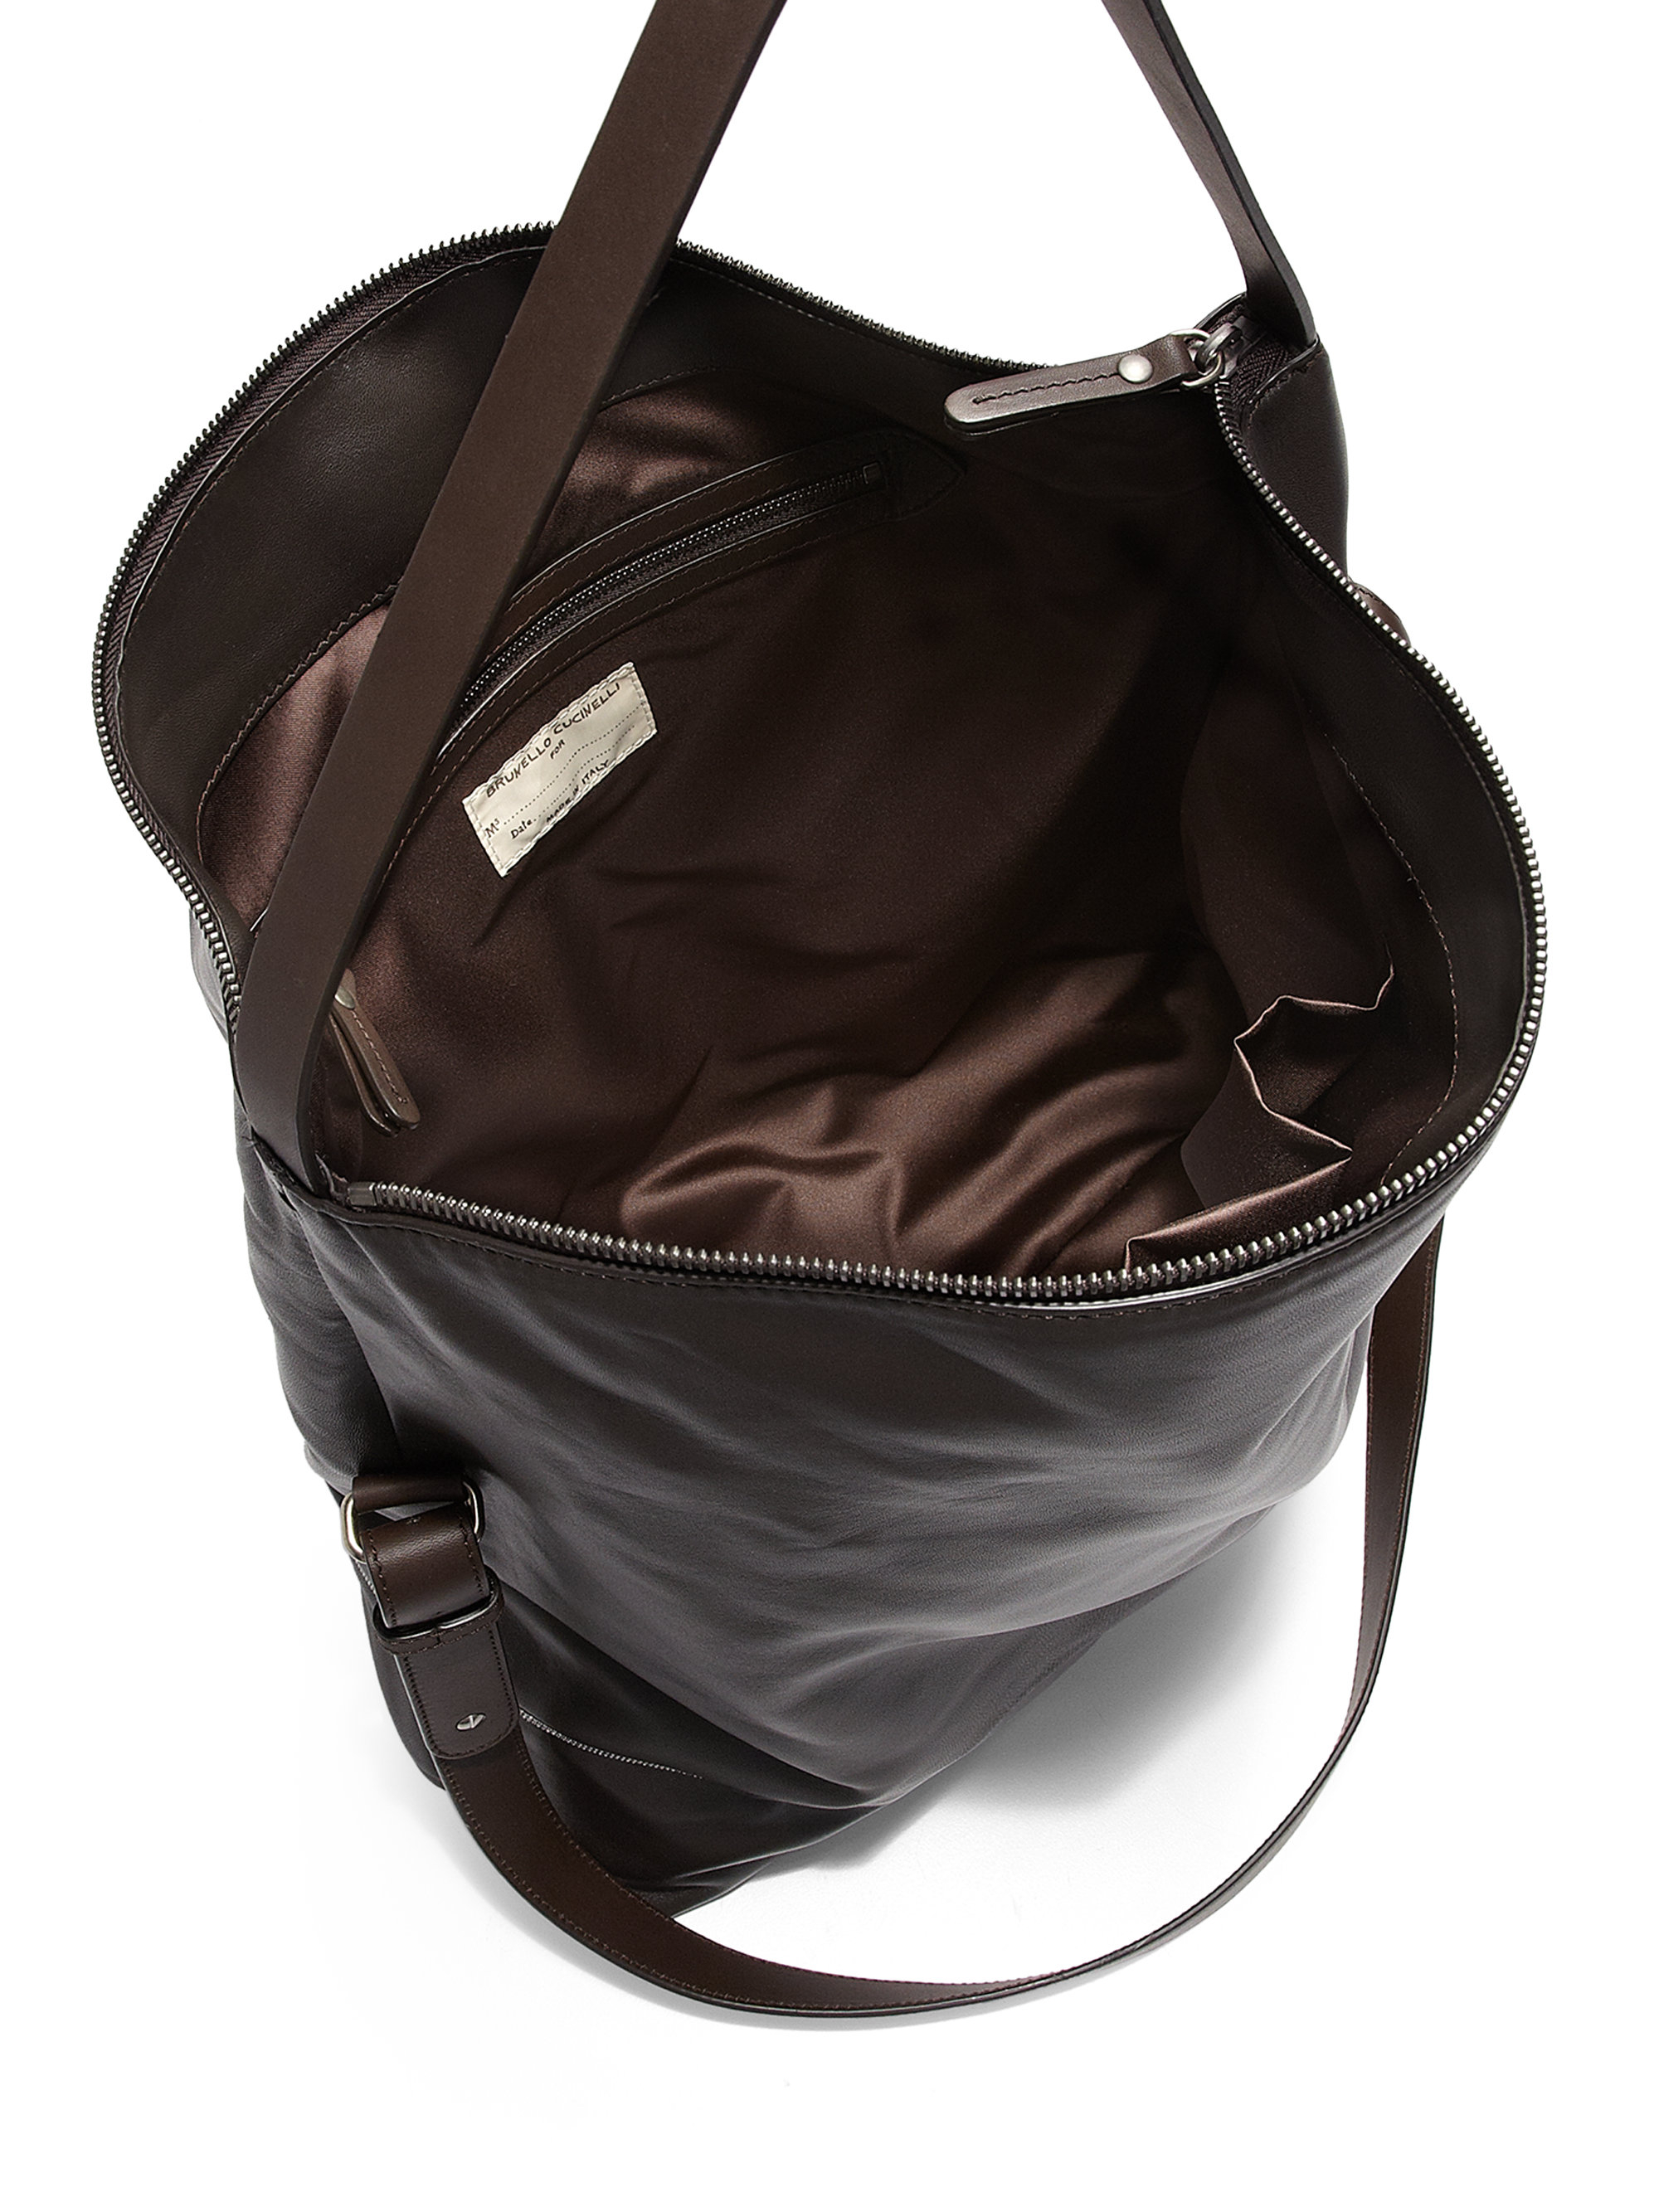 Brunello Cucinelli Leather Hobo Crossbody Bag in Espresso (Black) - Lyst